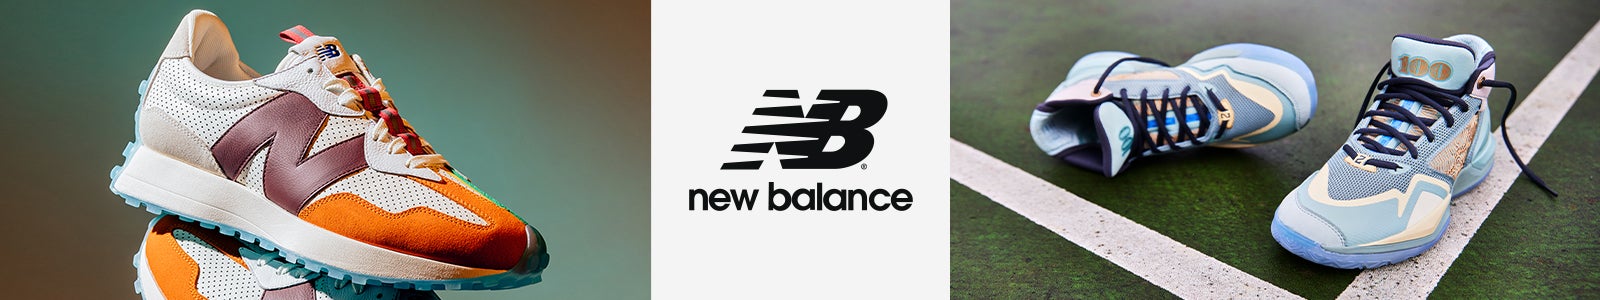 New Balance Shoes \u0026 Apparel | Foot Locker